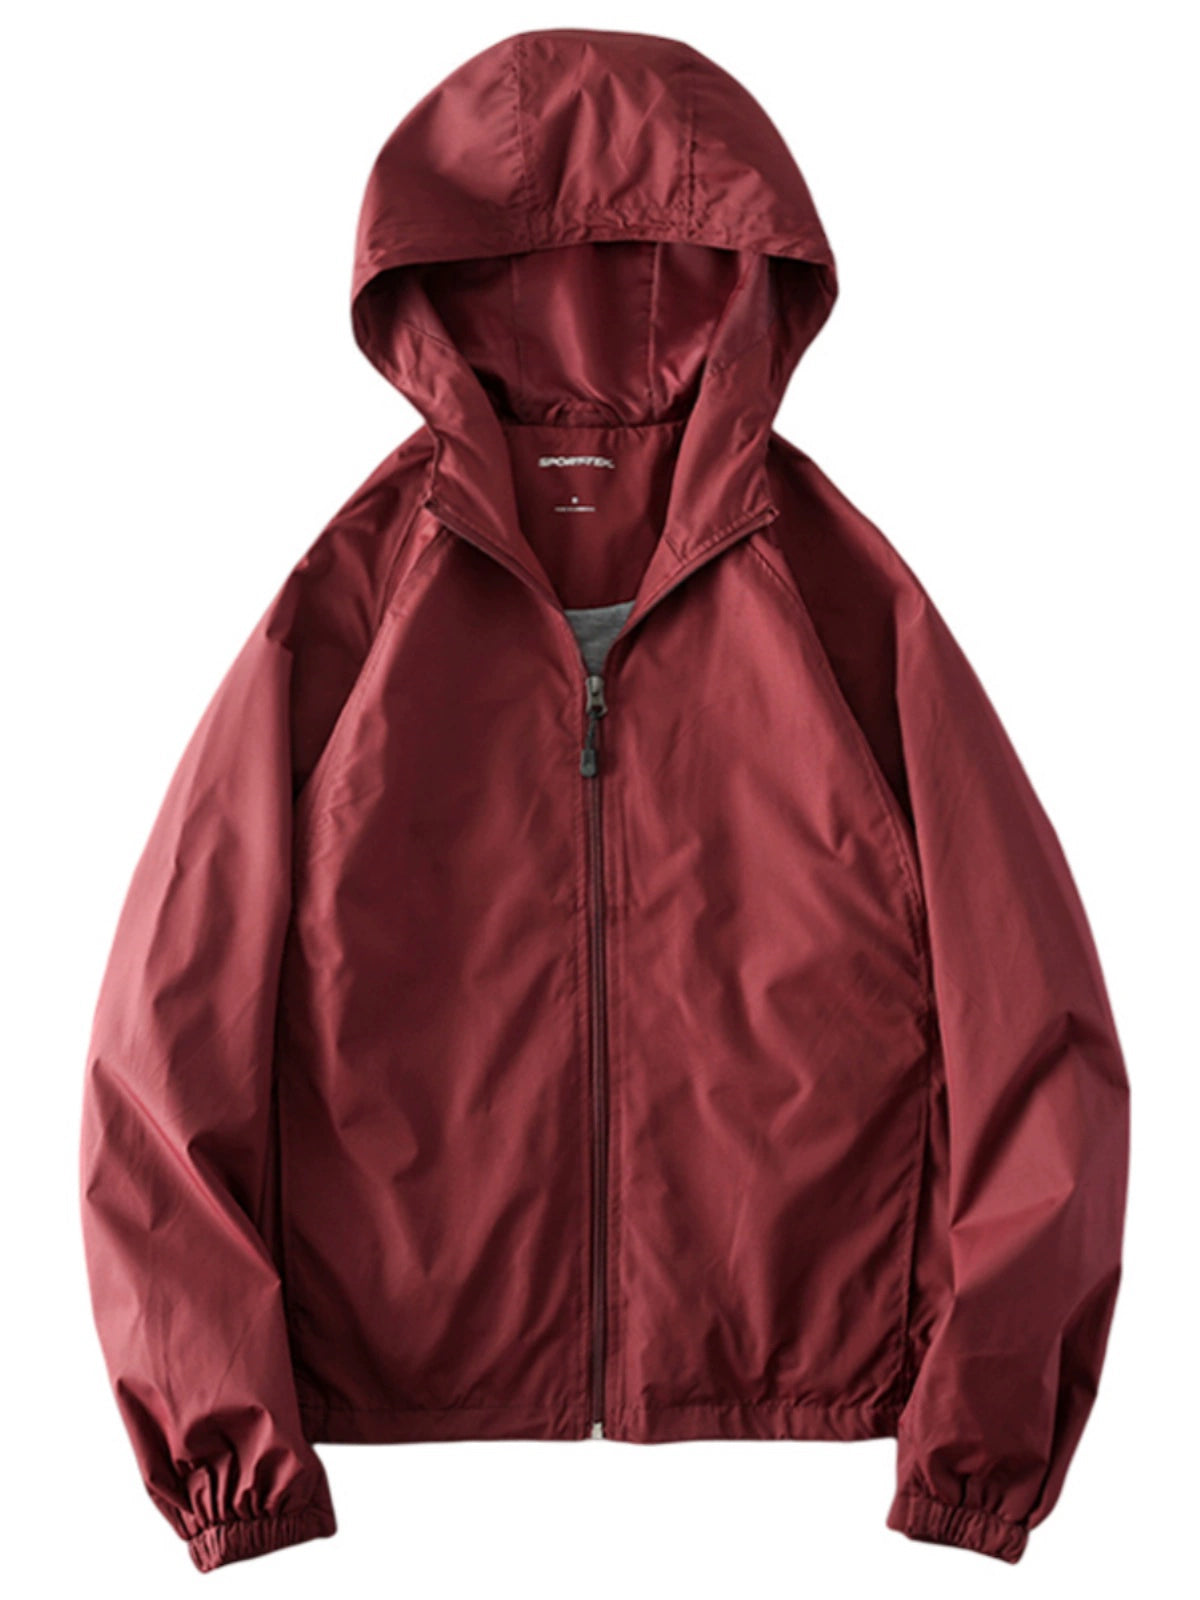 American Soft Shell Jacket Coat Men's Spring and Autumn Fashion Brand Waterproof Windproof Retro Sports Windbreaker Export Men's Jacket